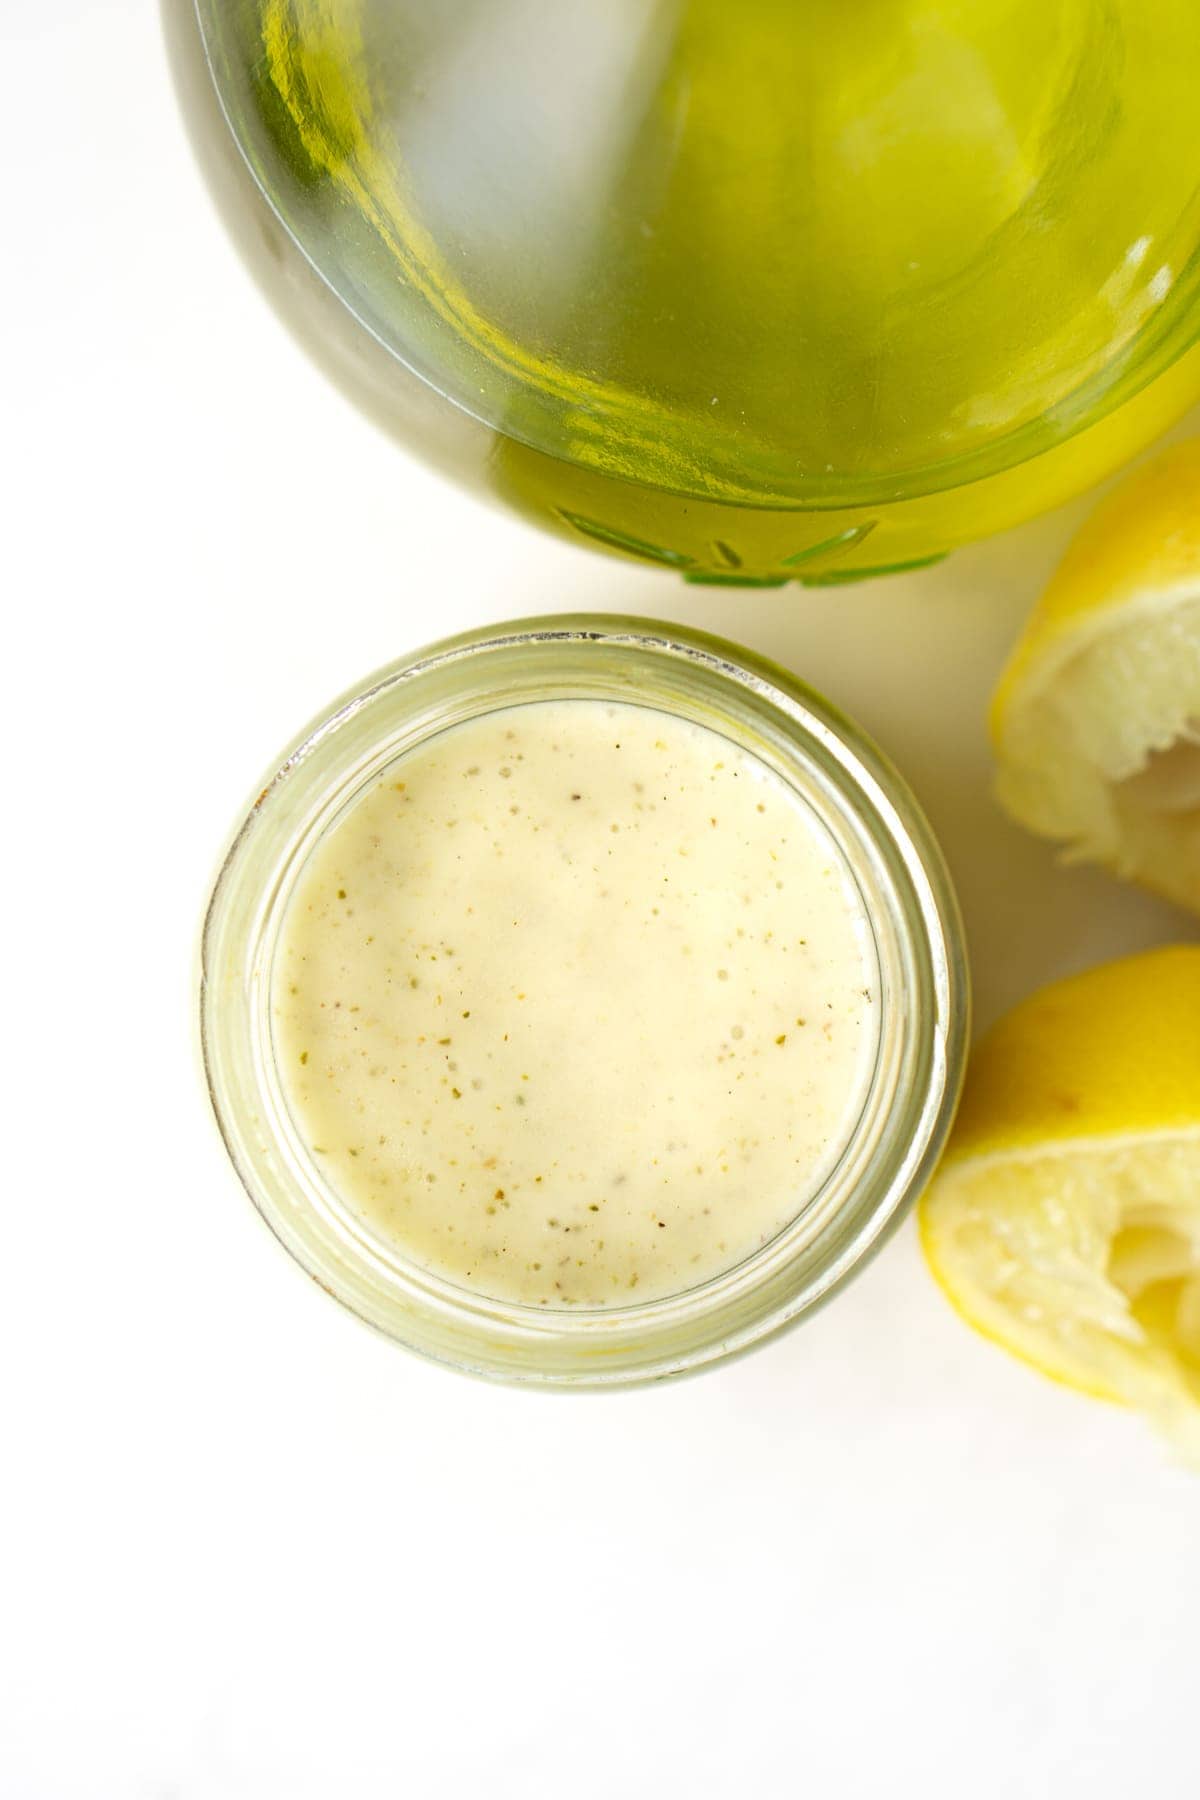 Lemon garlic sauce in a jar